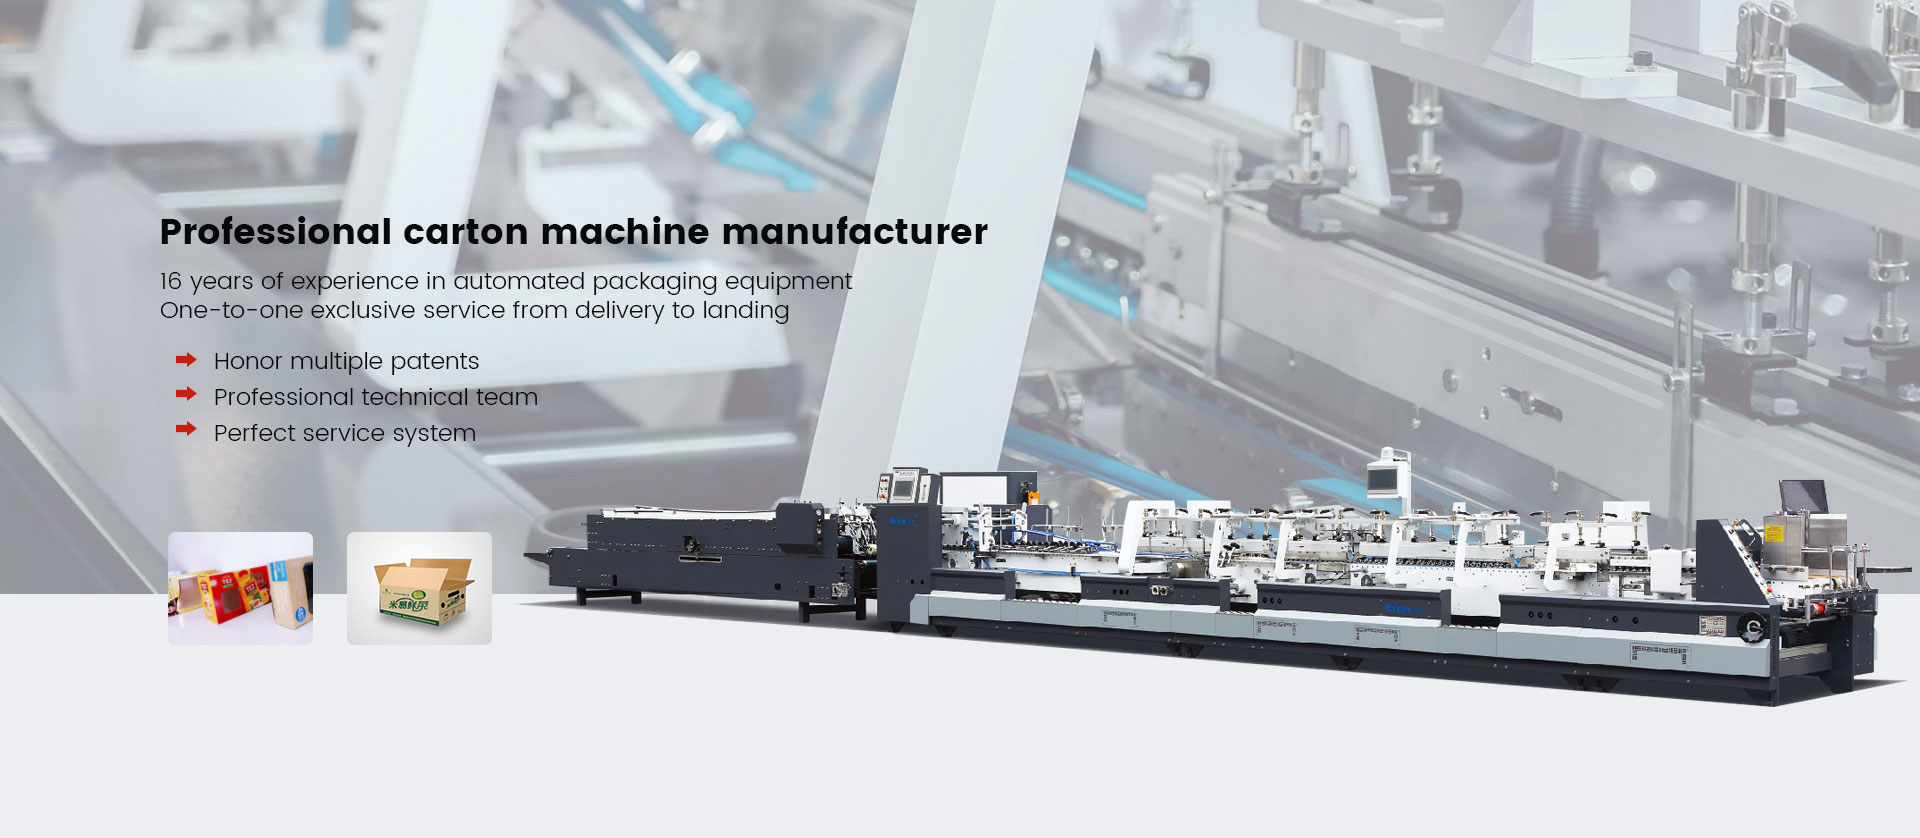 Professional carton machine manufacturer